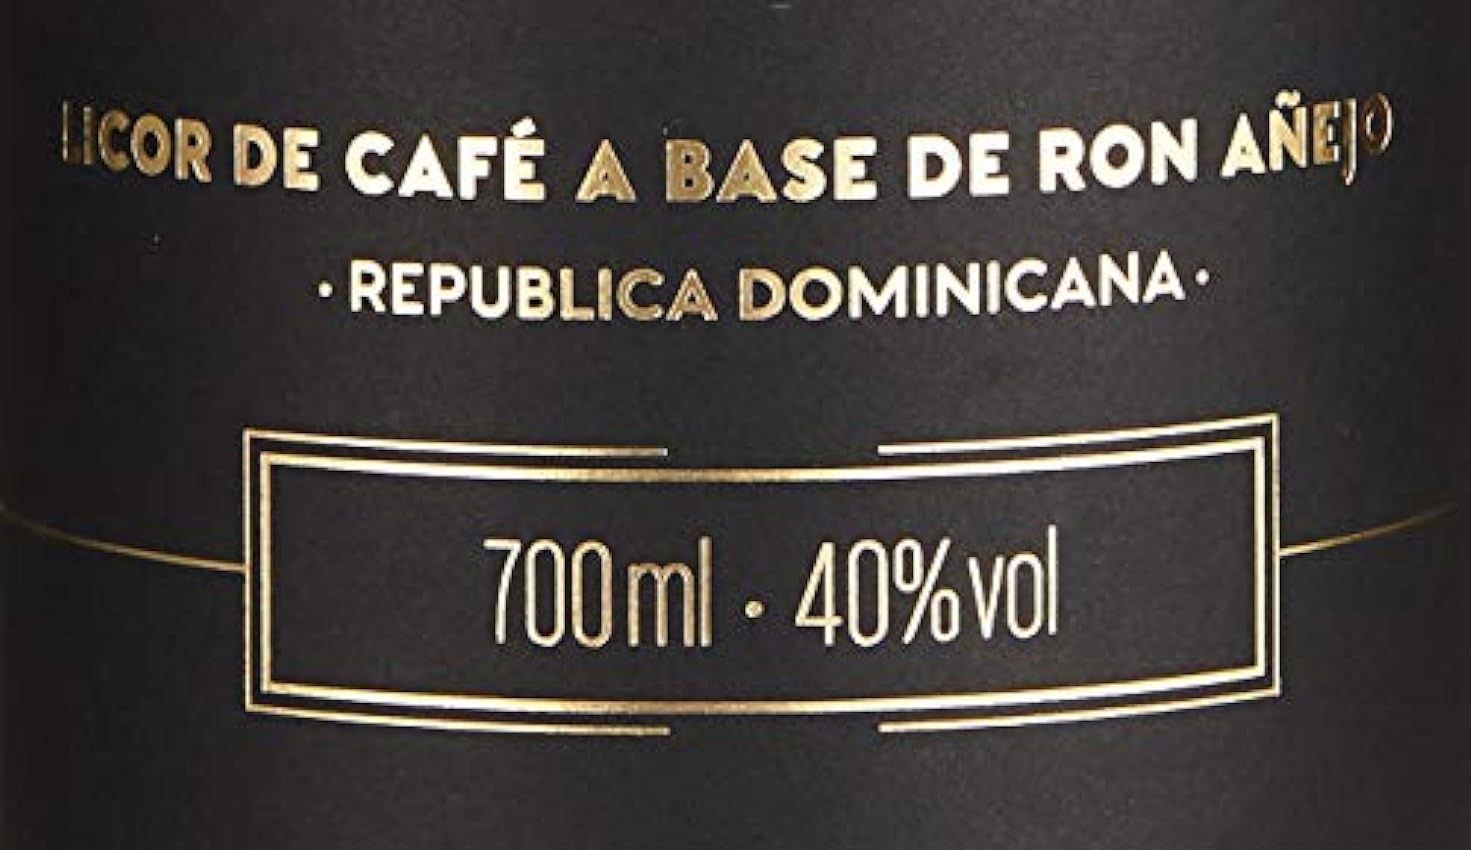 angemessenen Preis Espero Liqueur Creole I Coffee & Rum I 700 ml I 40% Volume I Kaffee-Rum Likör 2EuhGvU4 Online Bestellen